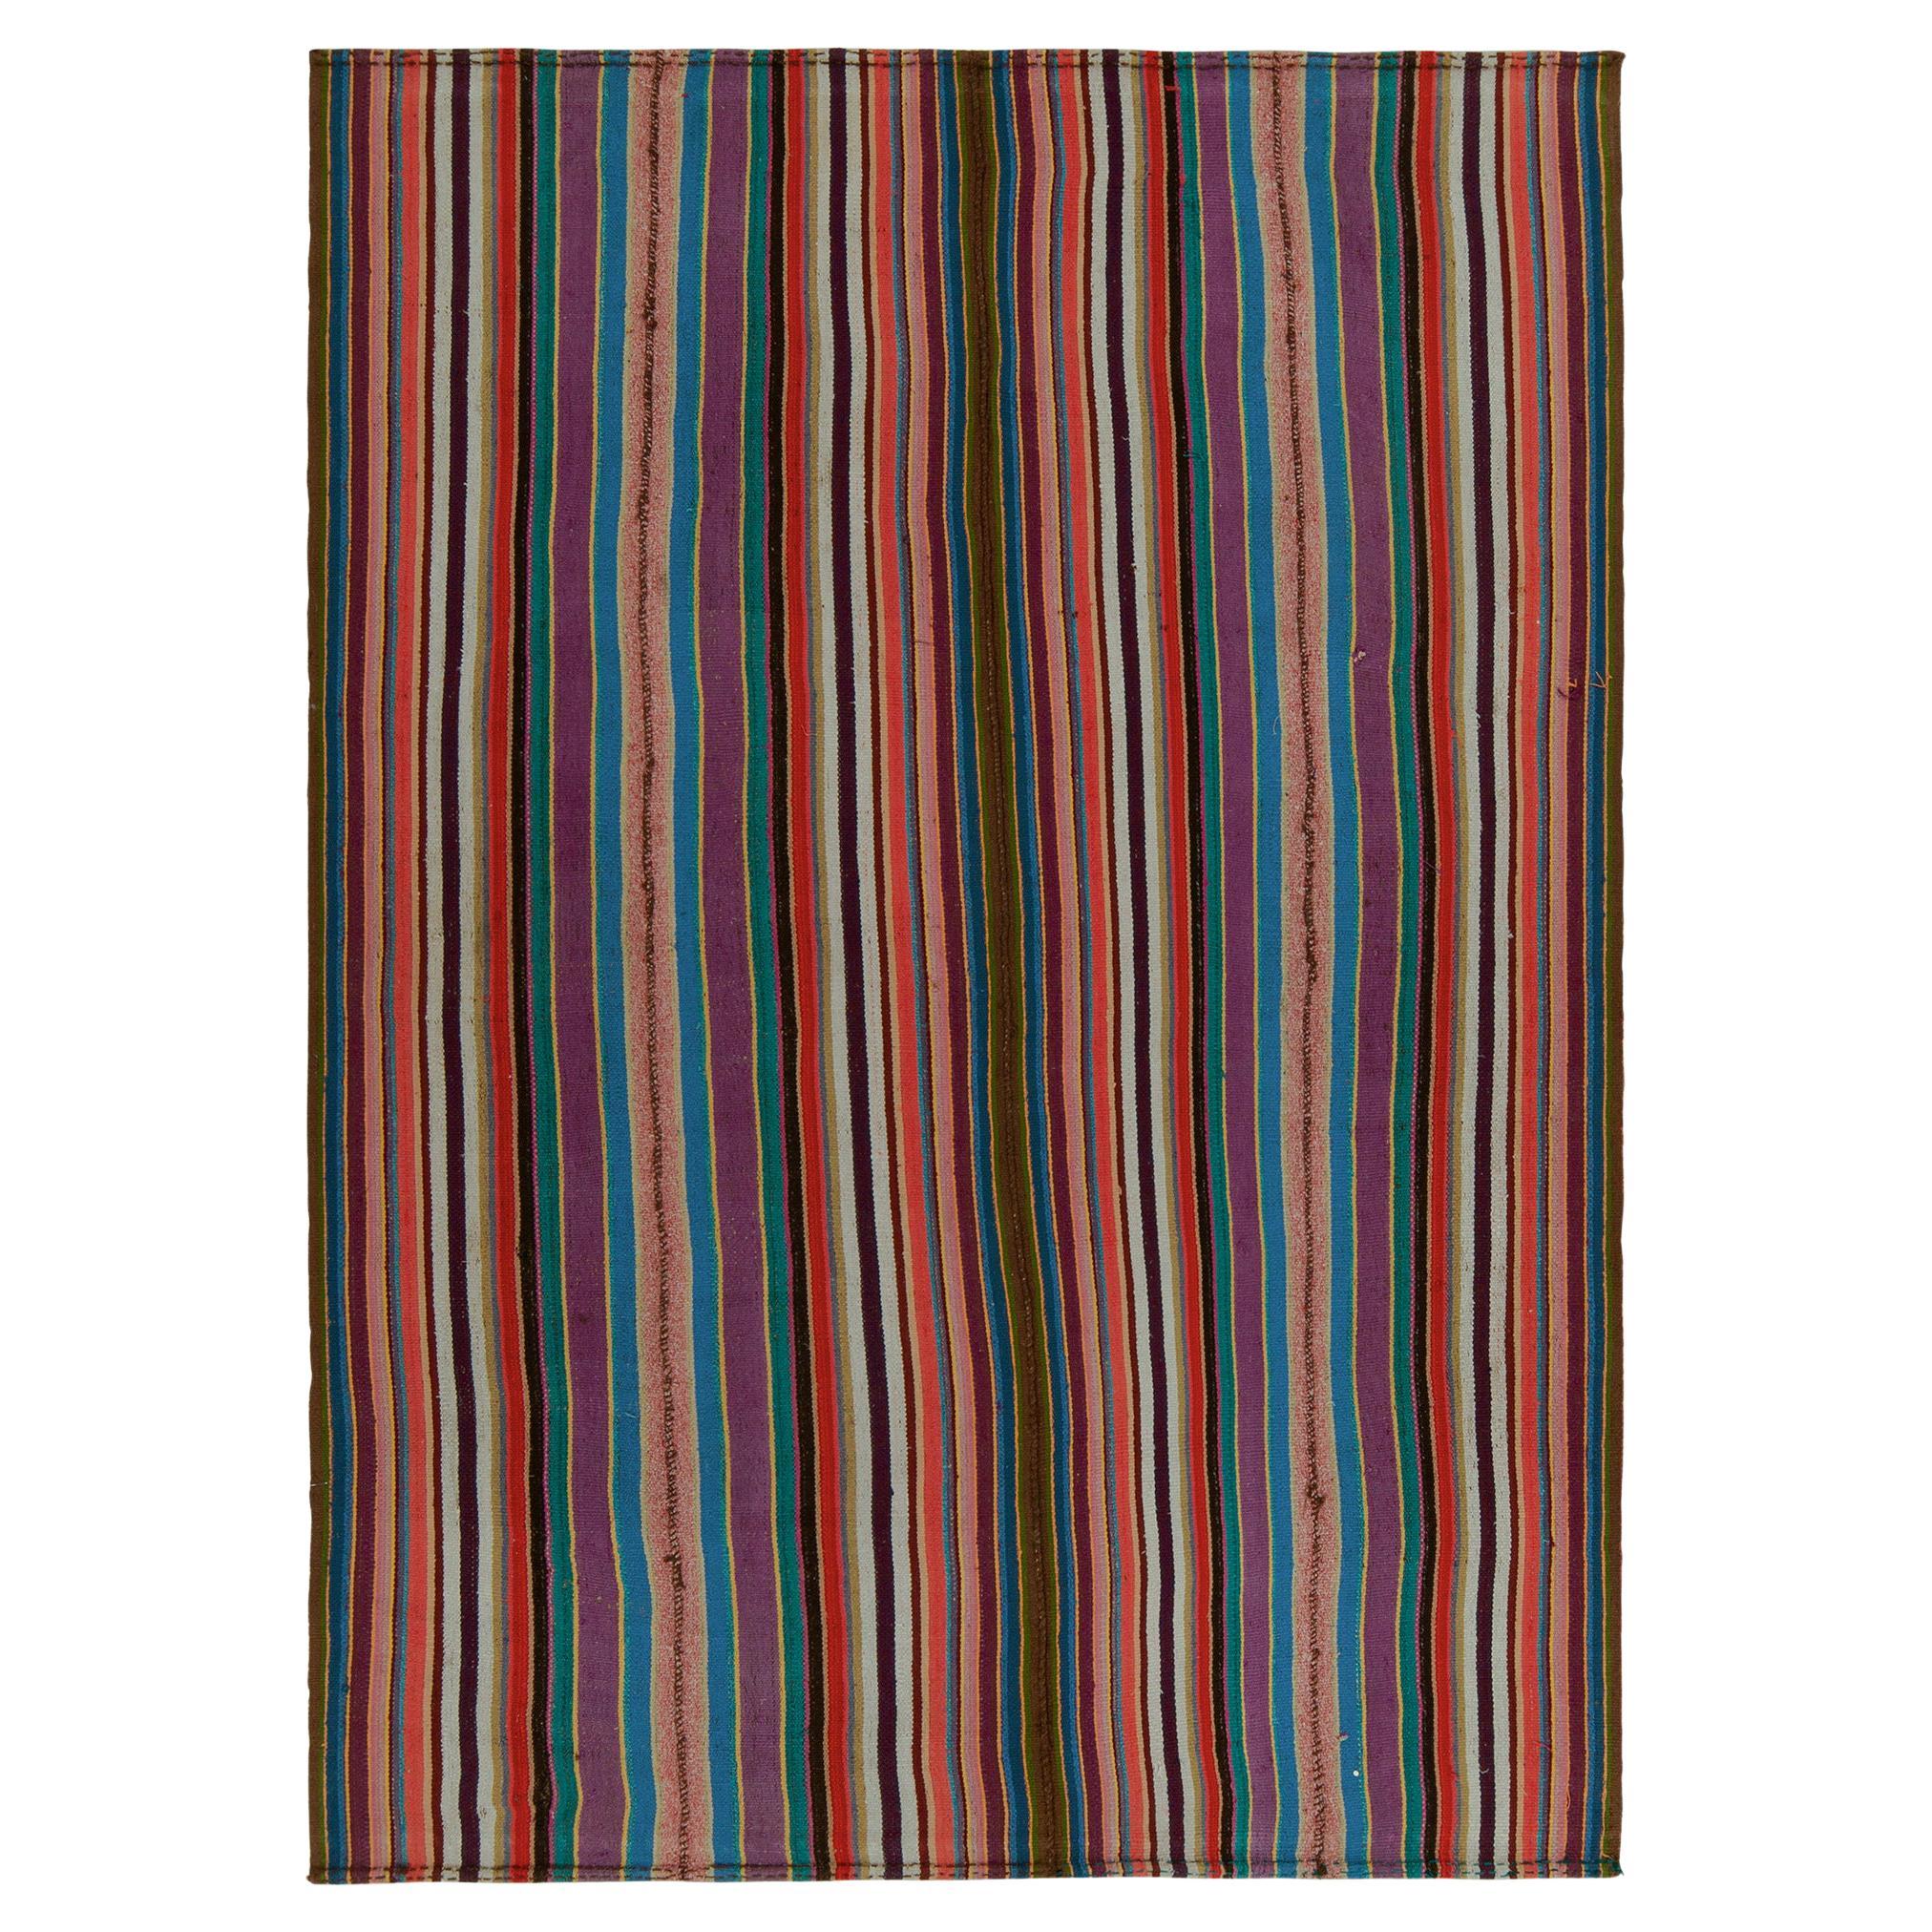 1950s Vintage Chaput Kilim Rug in Multicolor Stripes, Patterns by Rug & Kilim